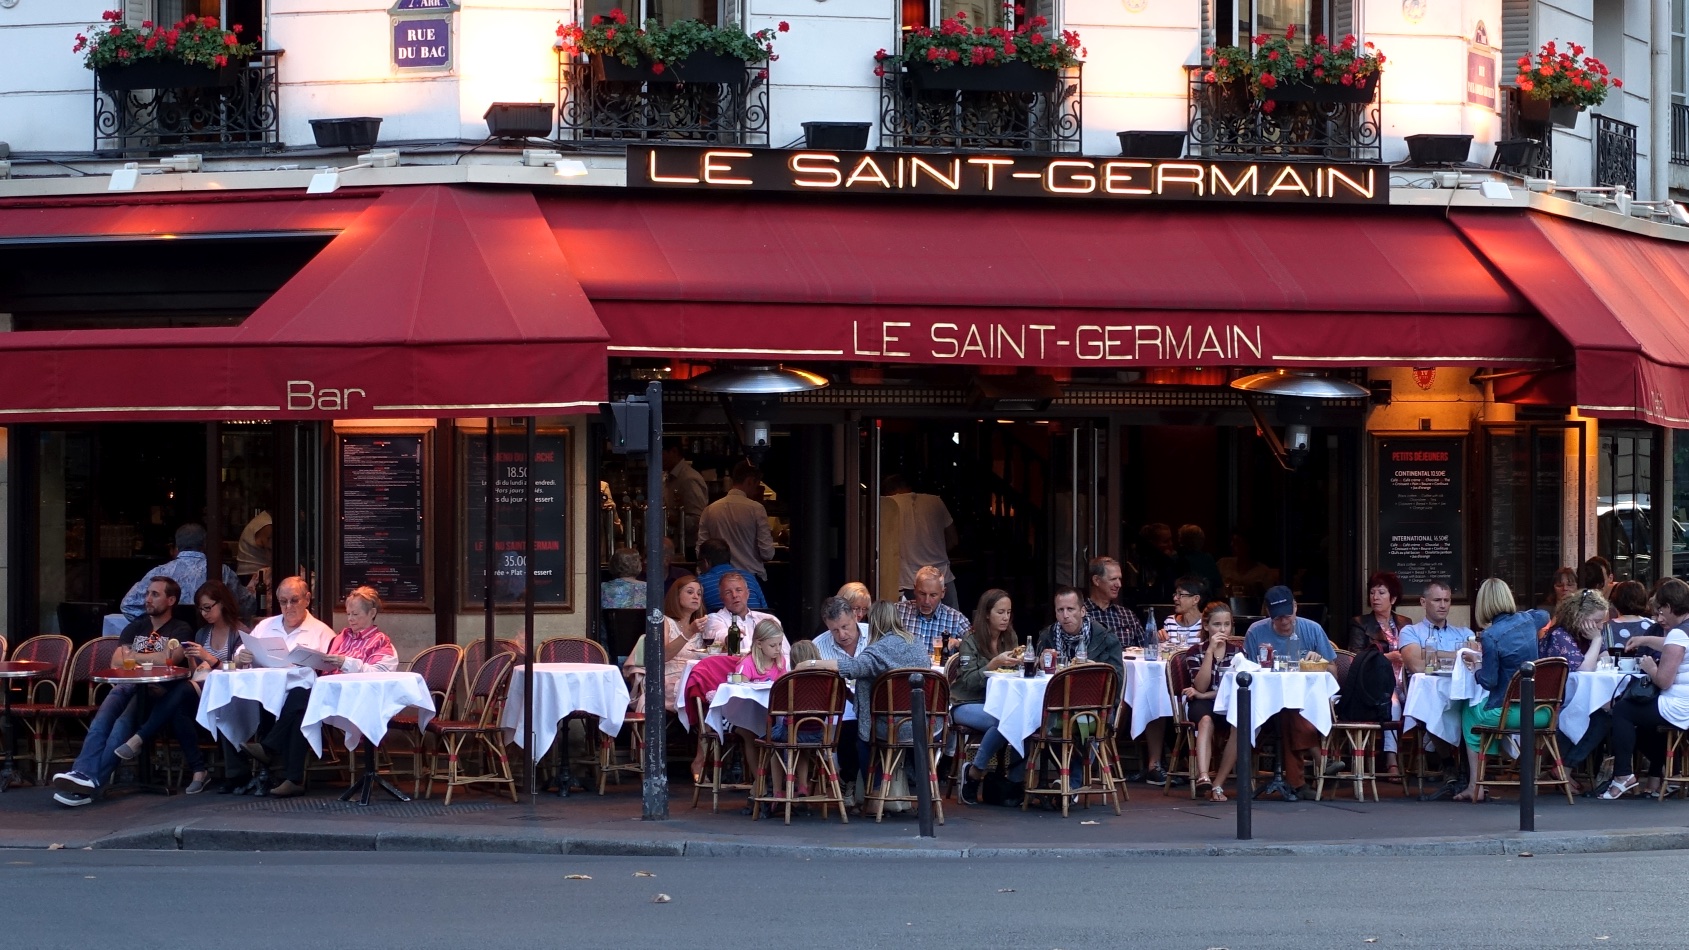 Restaurant goers enjoy a meal at Le Saint-Germain